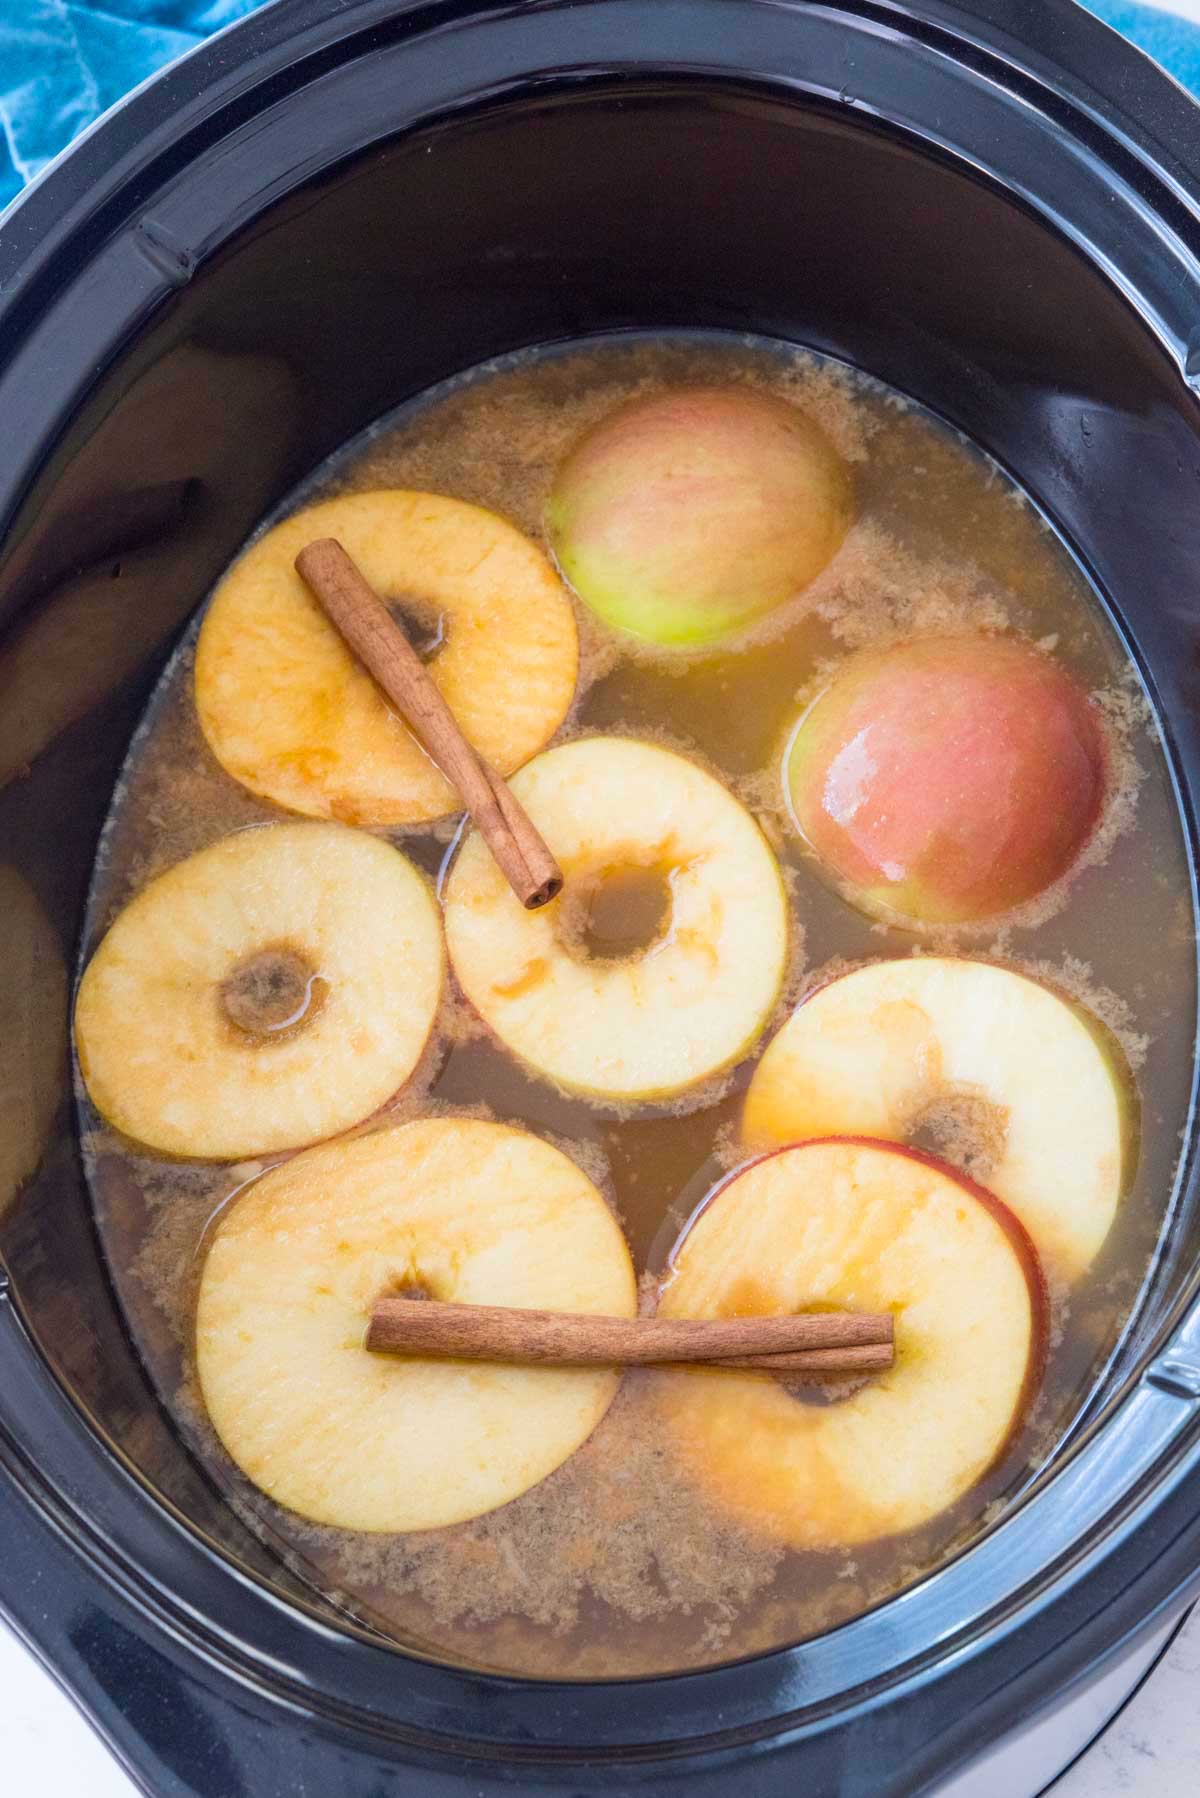 sliced apples and cinnamon sticks in a black crockpot.